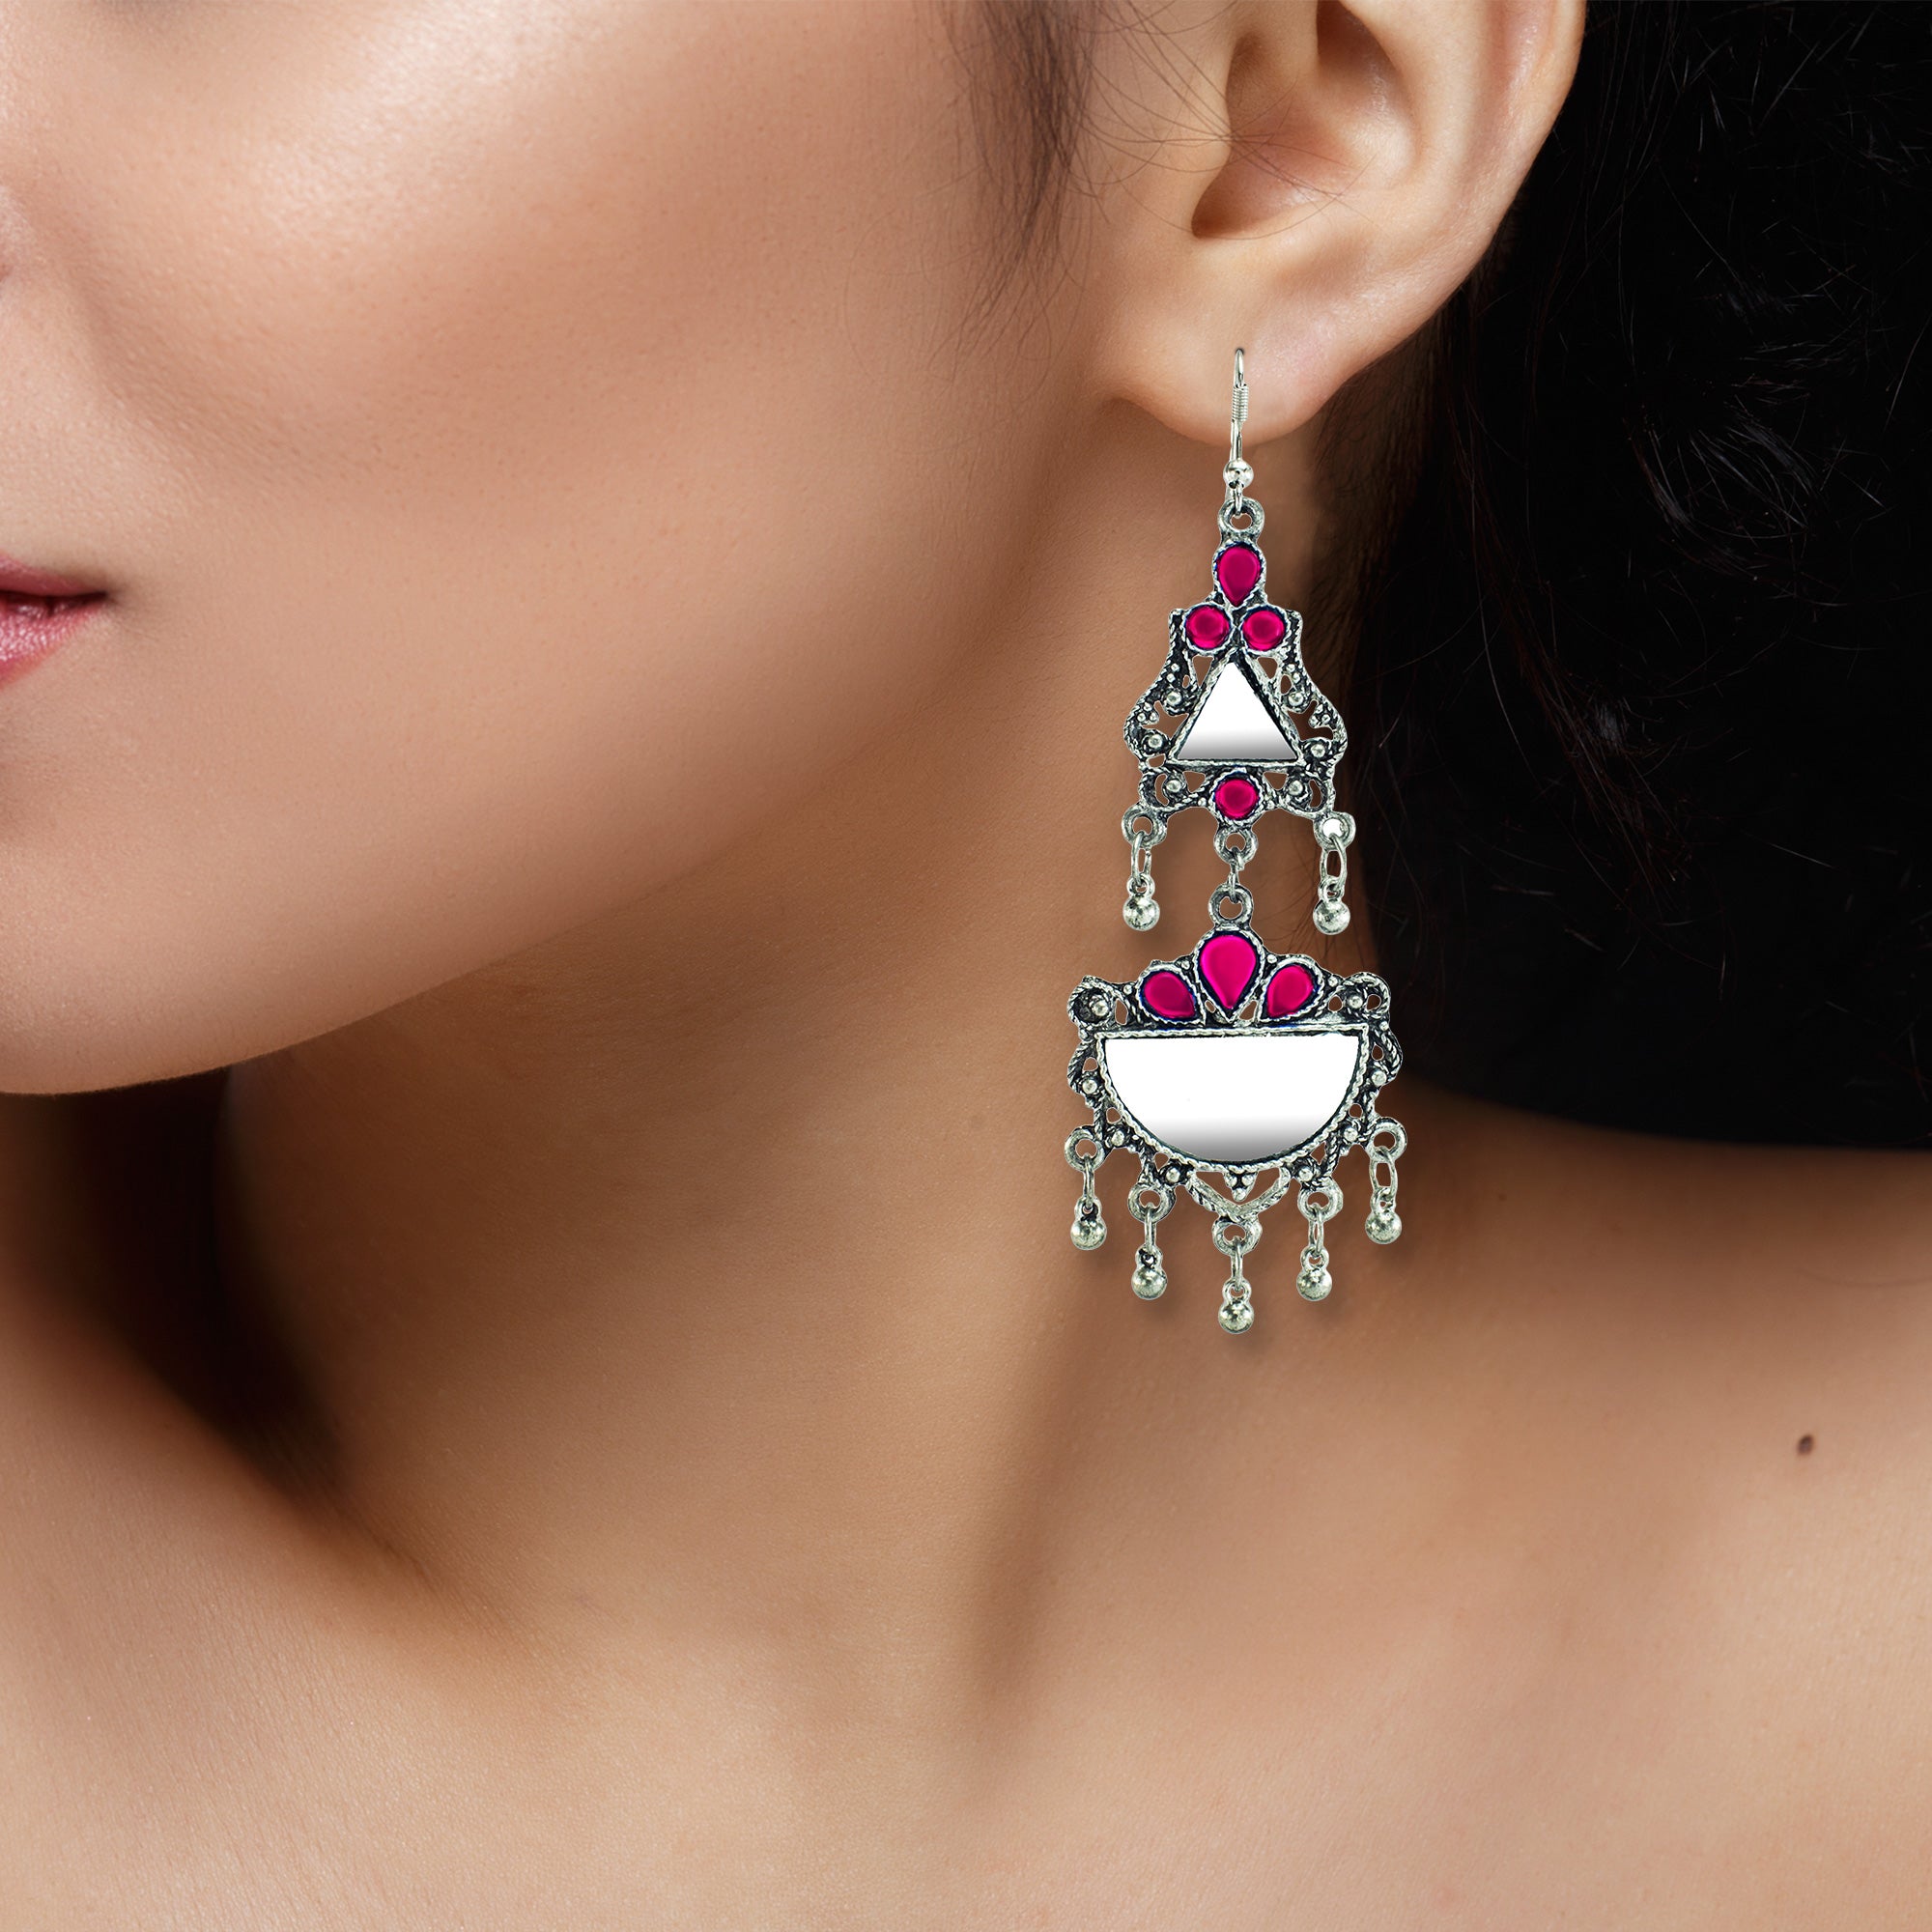 Abhinn Afghani Silver Oxidised Mirror With Pink Stones Dangler Earrings for Women